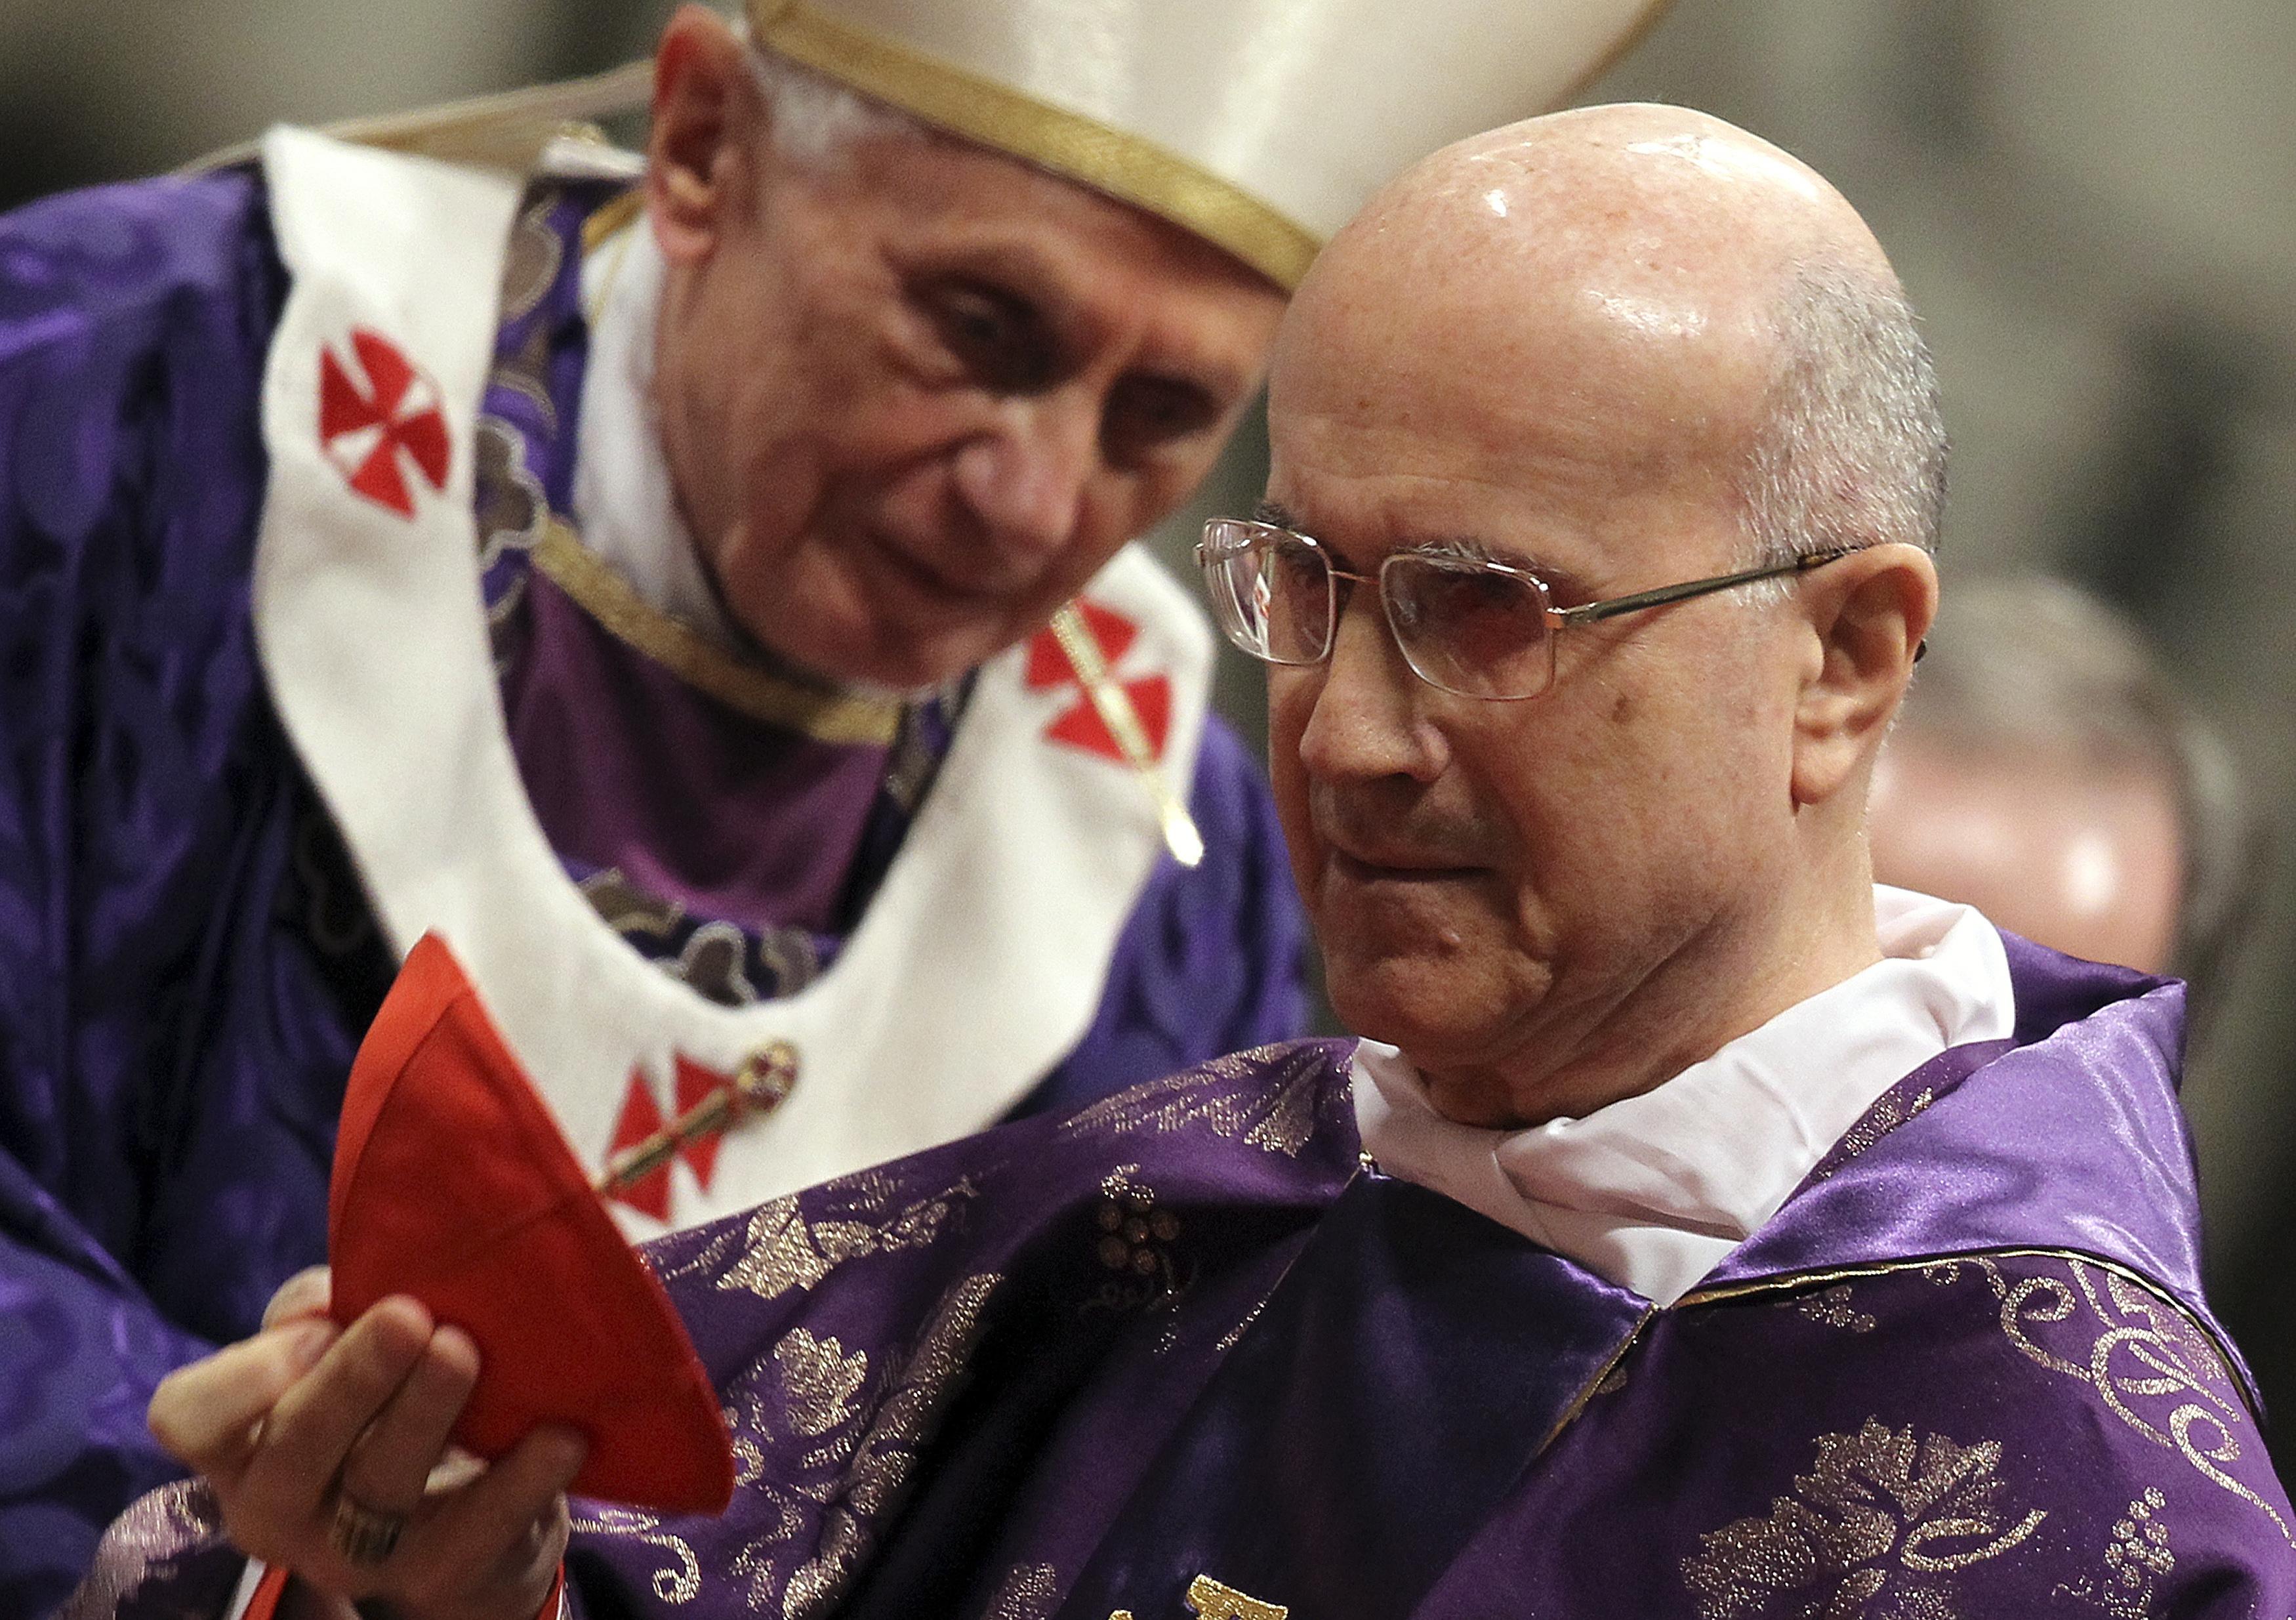 Gobierno provisional de Iglesia pasa a manos del cardenal camarlengo Bertone